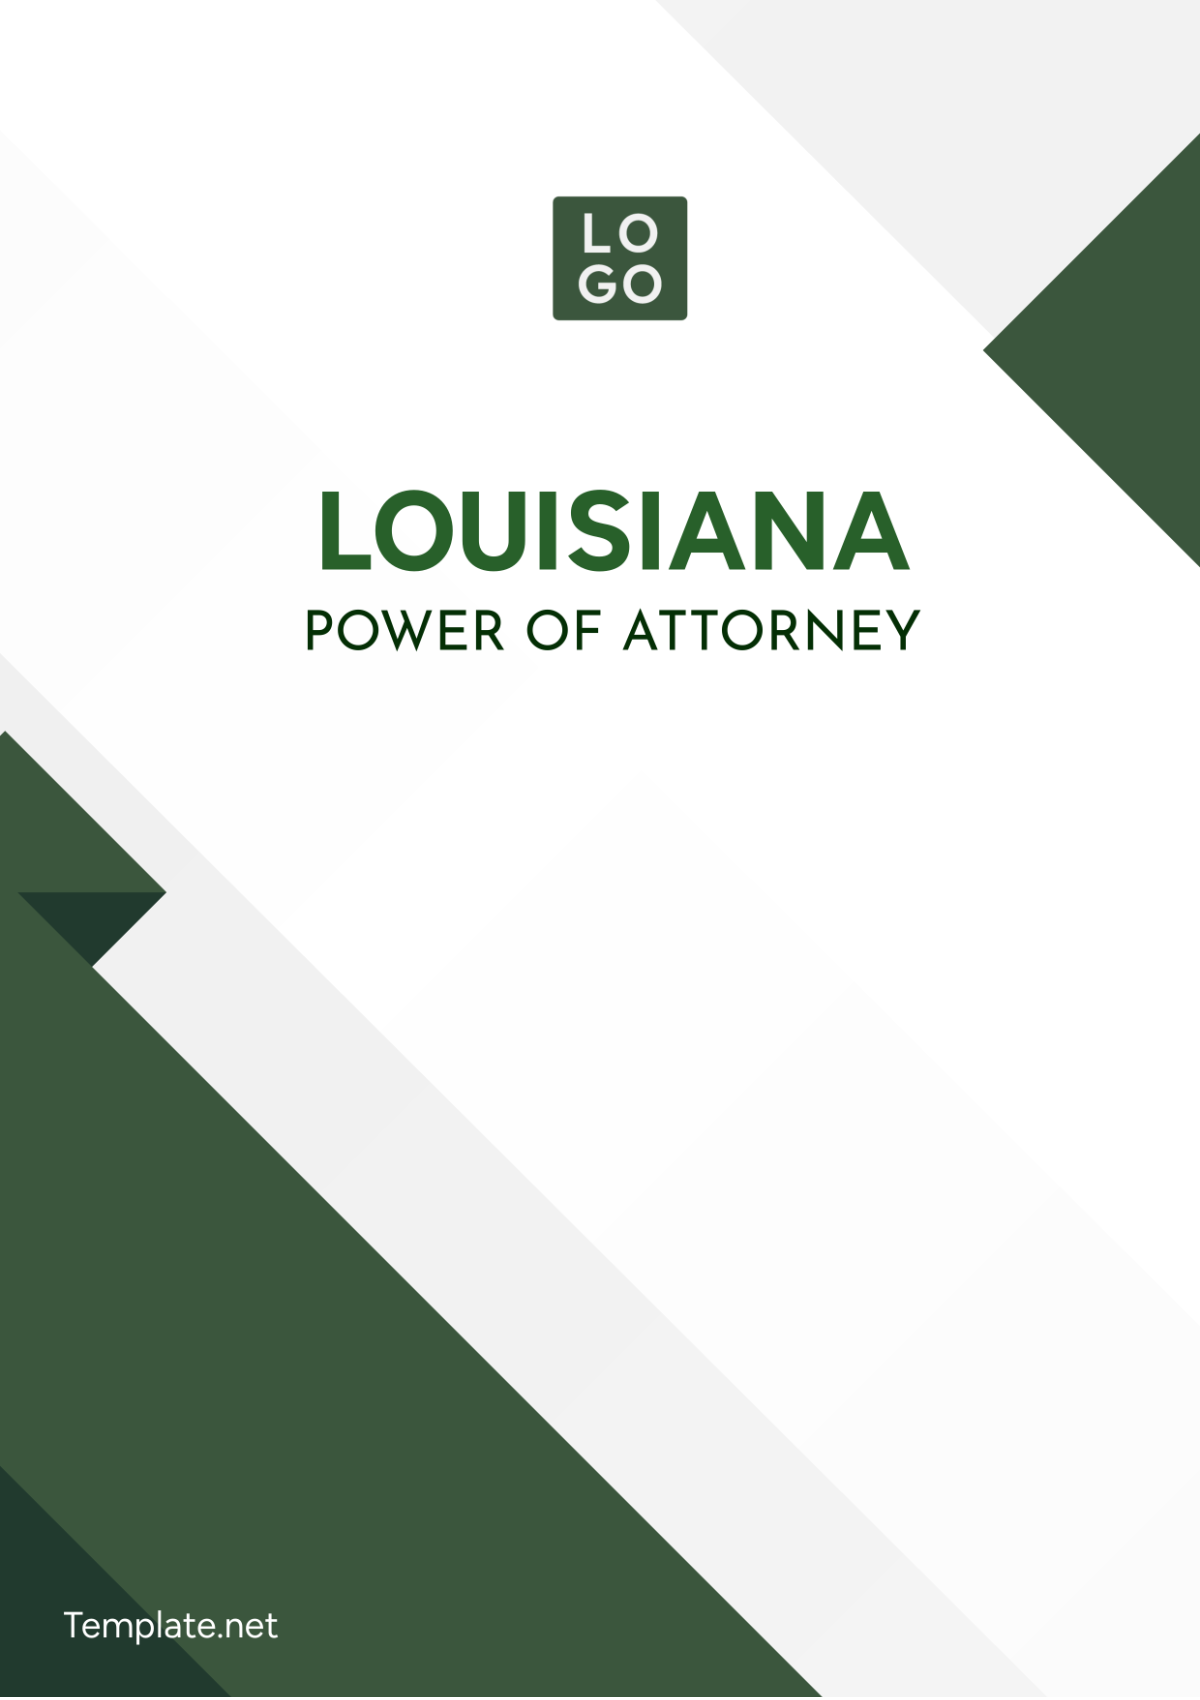 Louisiana Power of Attorney Template